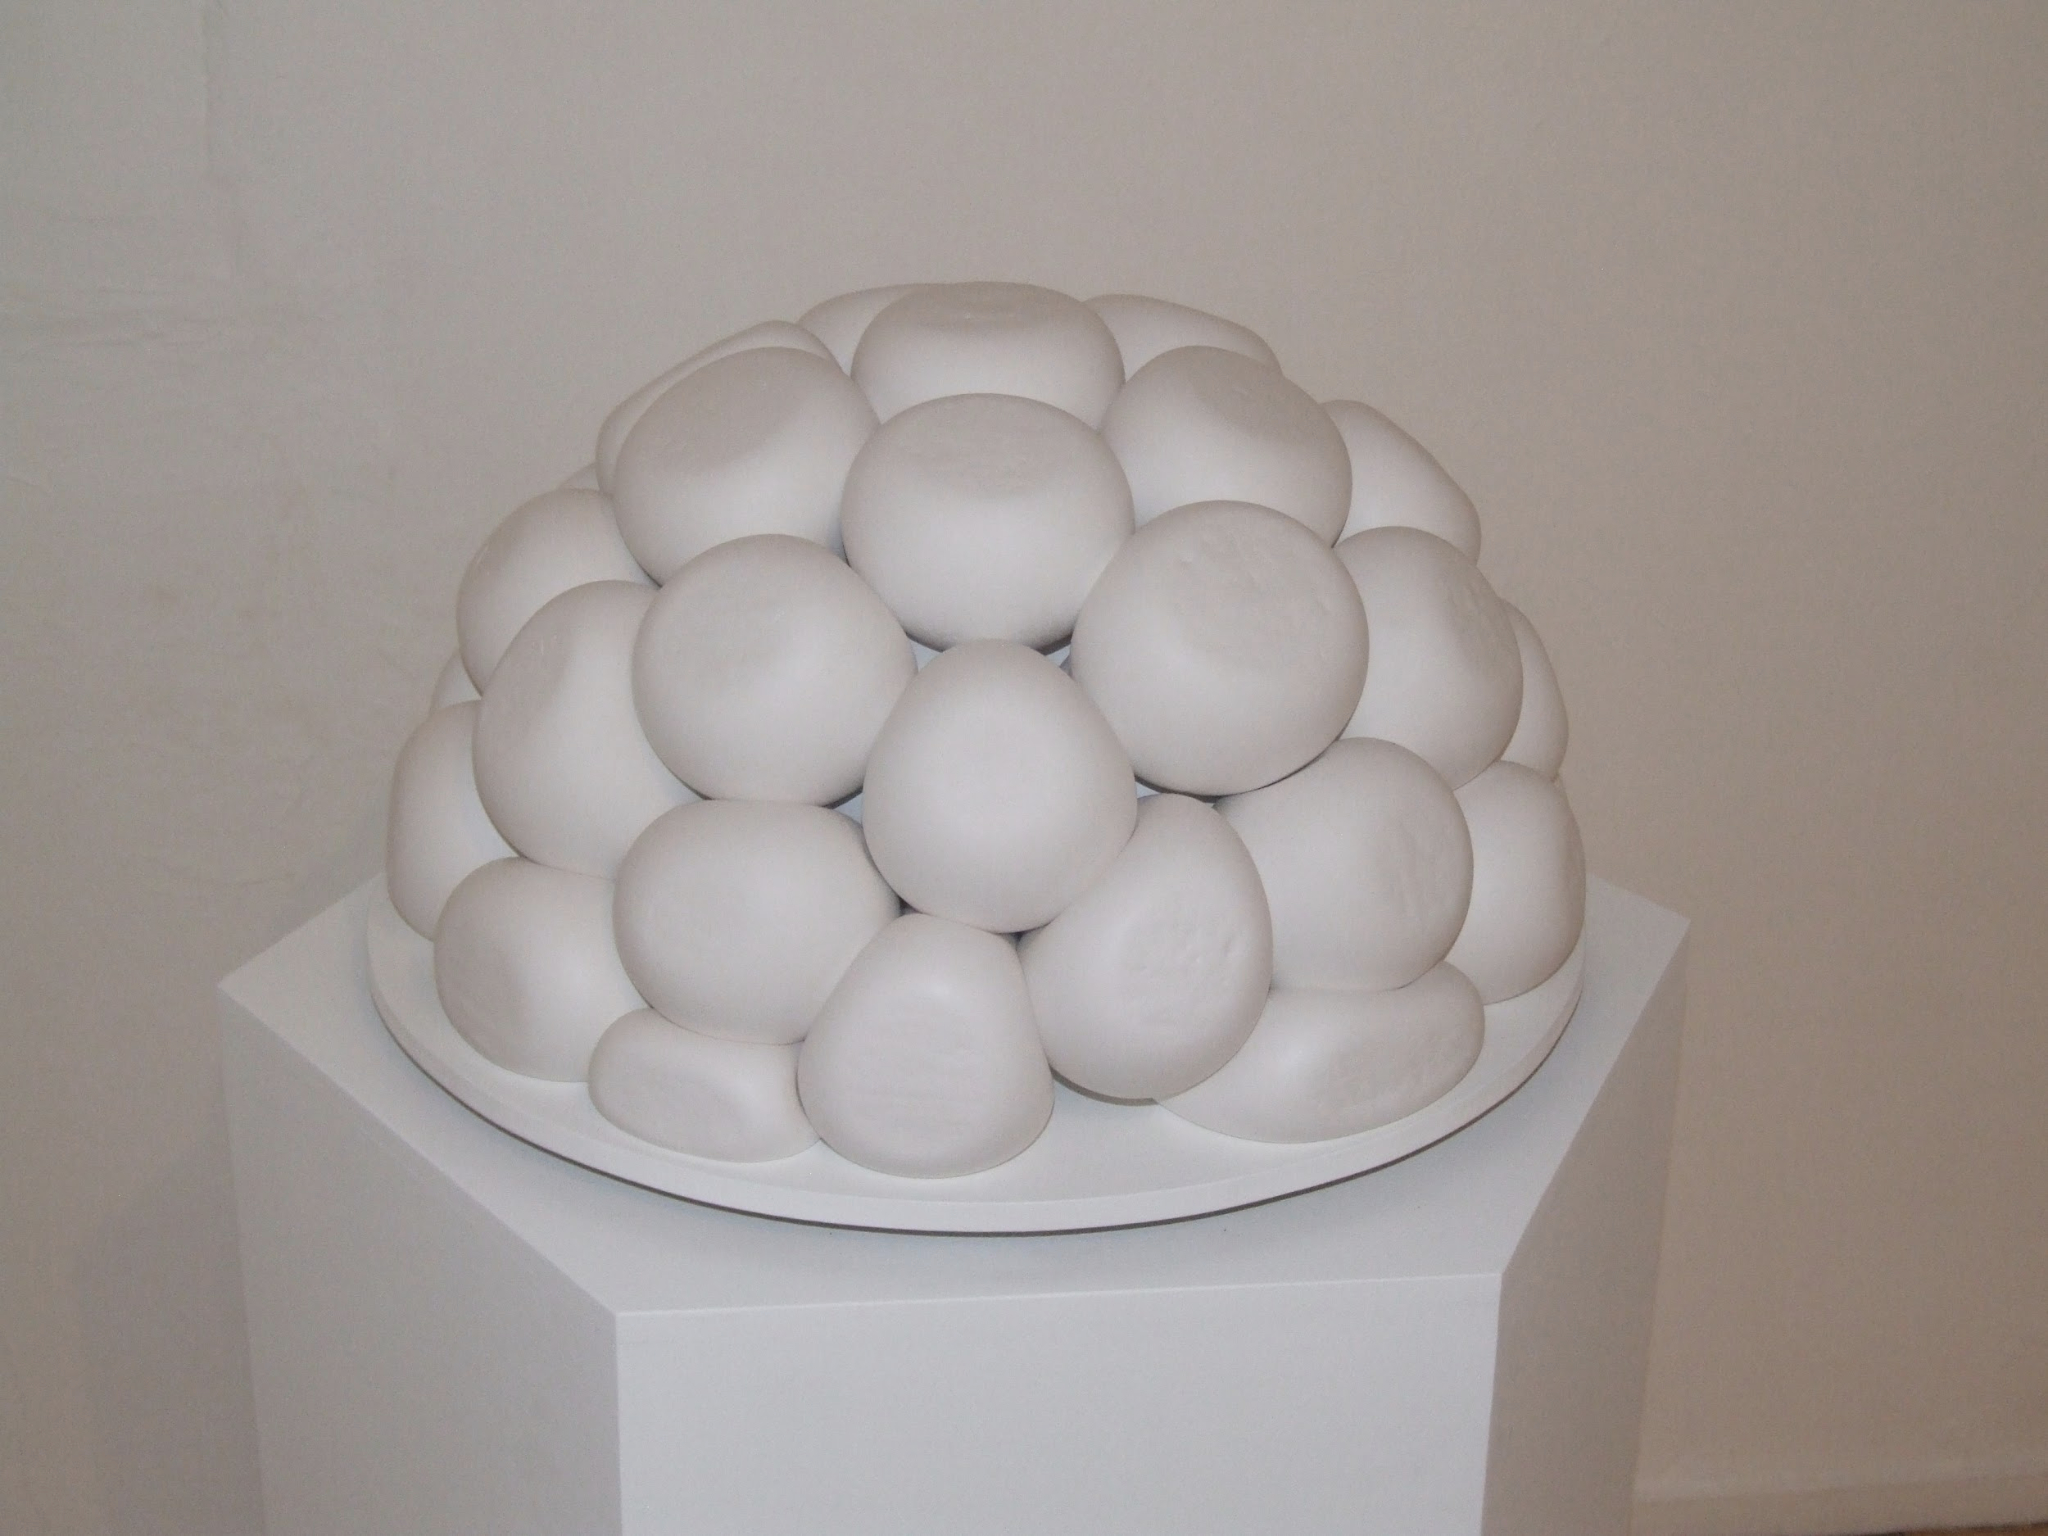 Dominic Hopkinson: As Buckminster Said Too (2010). Plaster and MDF, 70cm diameter. Exhibited at “Plato, Meet Buckminster” exhibition at South Square Gallery, Bradford. Photo: artist's own.